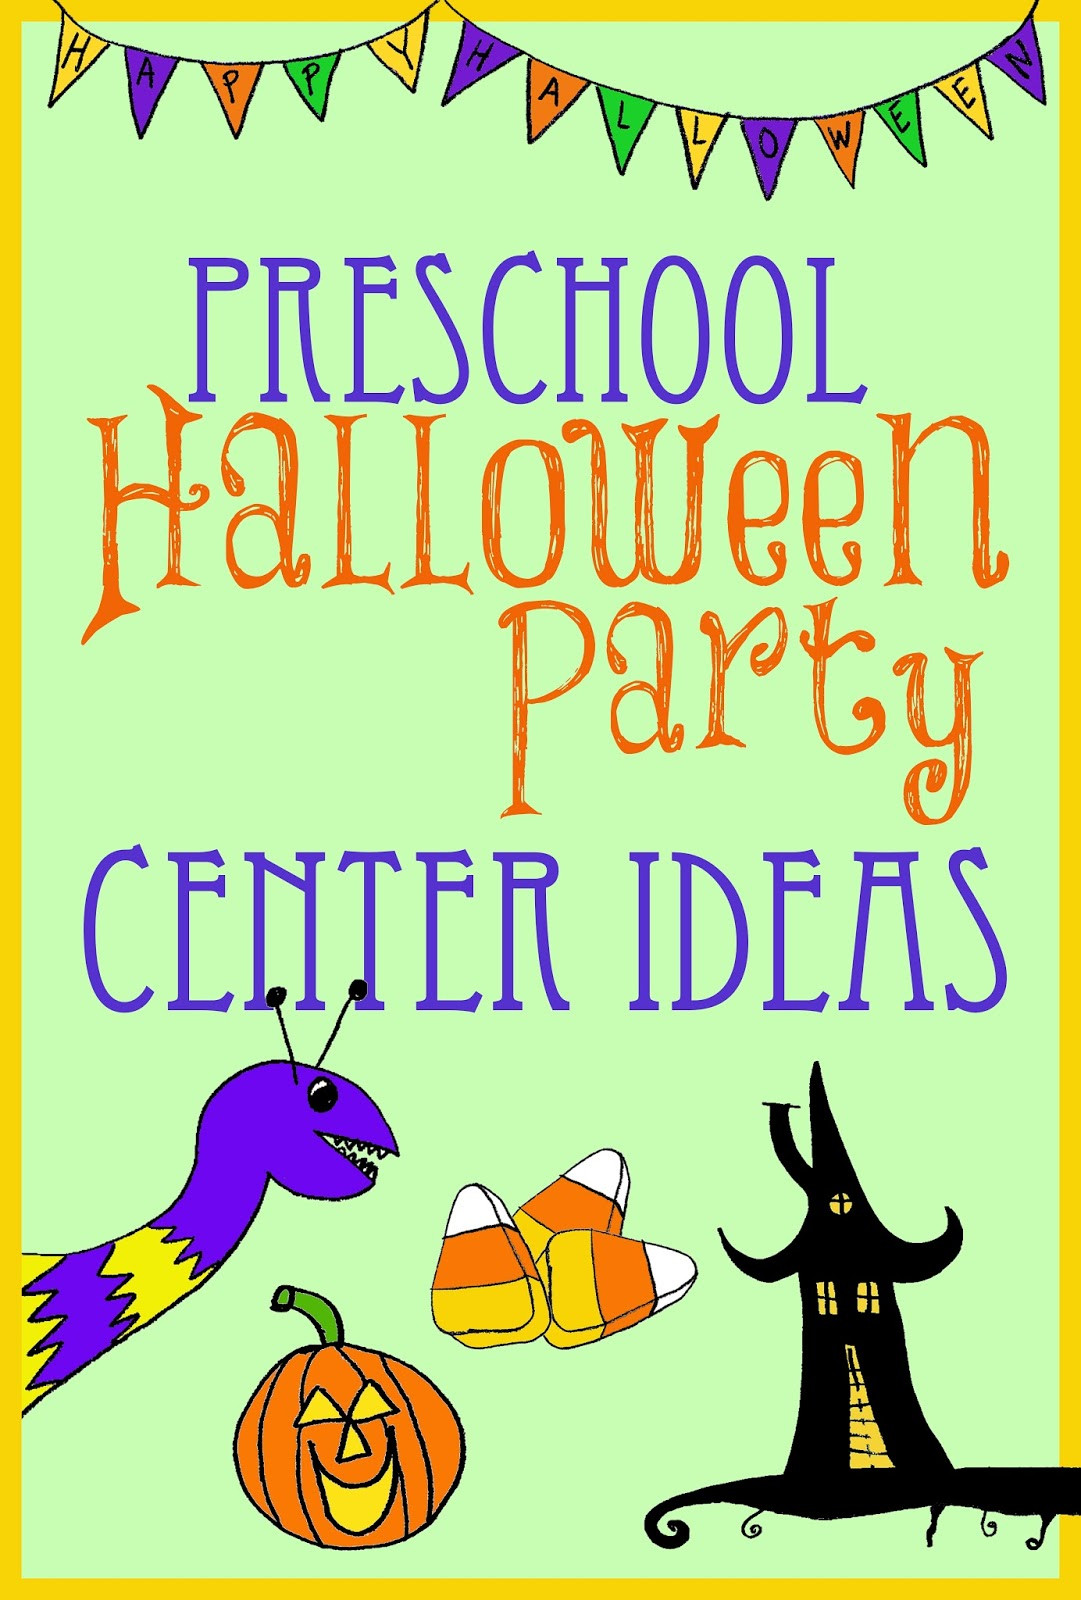 Halloween Class Party Ideas Kindergarten
 Halloween Party Center Ideas for Preschool Kindergarten